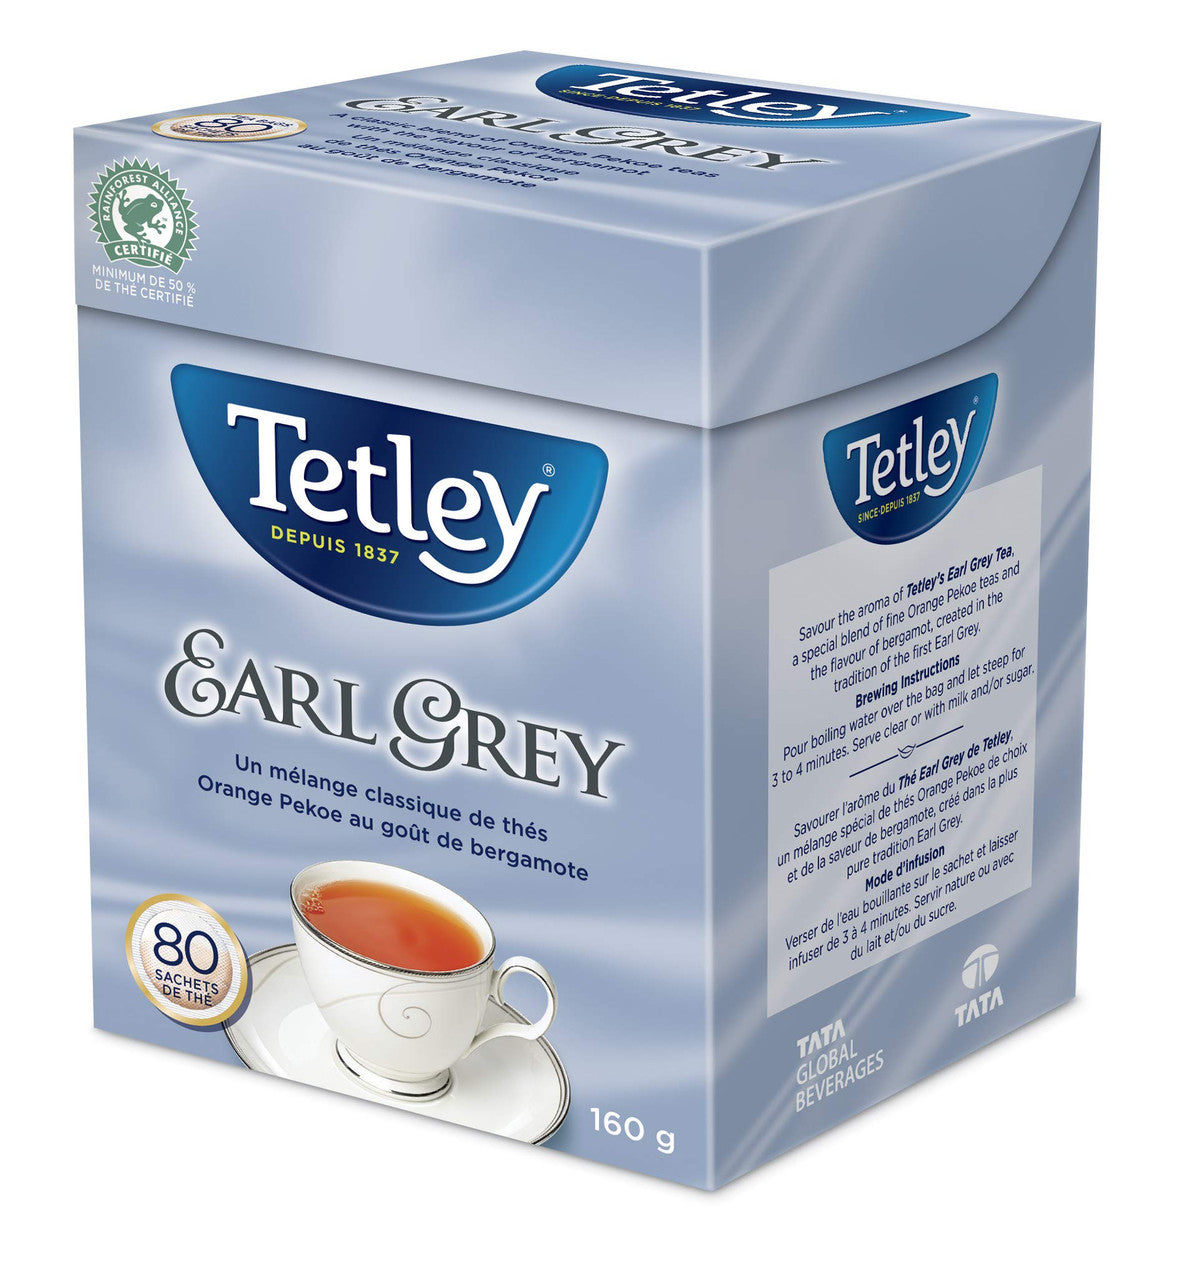 Tetley Earl Grey Tea, 80 tea bags, 160g/5.6oz, (Imported from Canada)